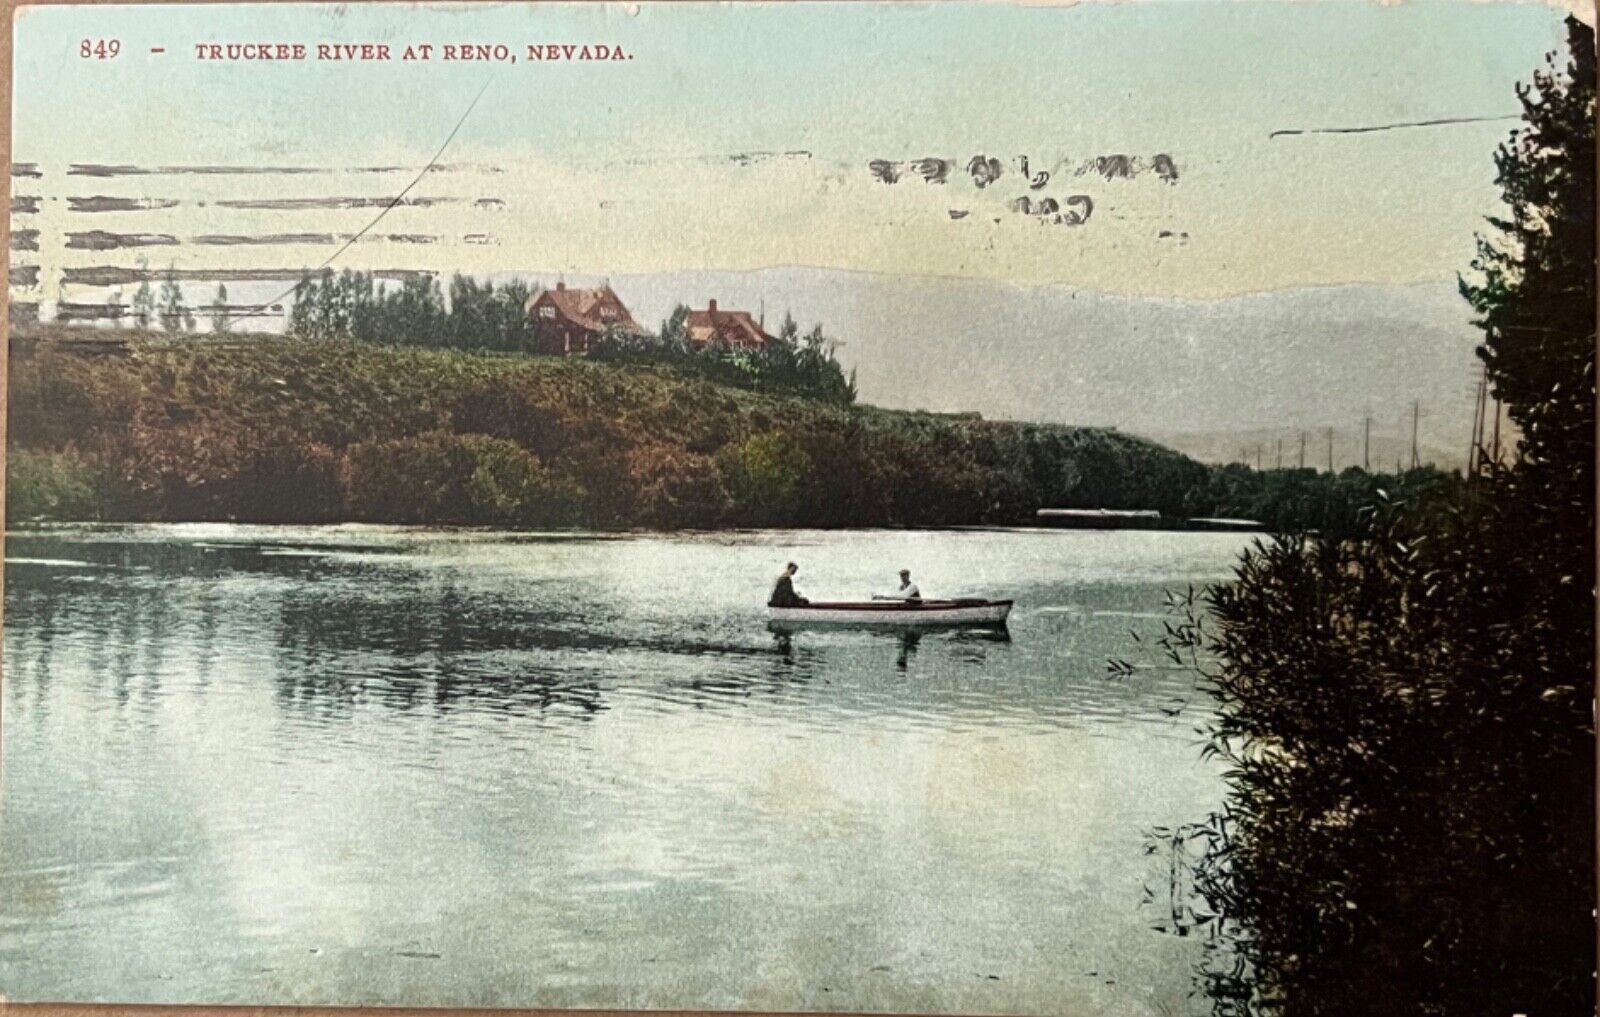 Reno Nevada Truckee River People Canoeing Scenic View Vintage Postcard c1910